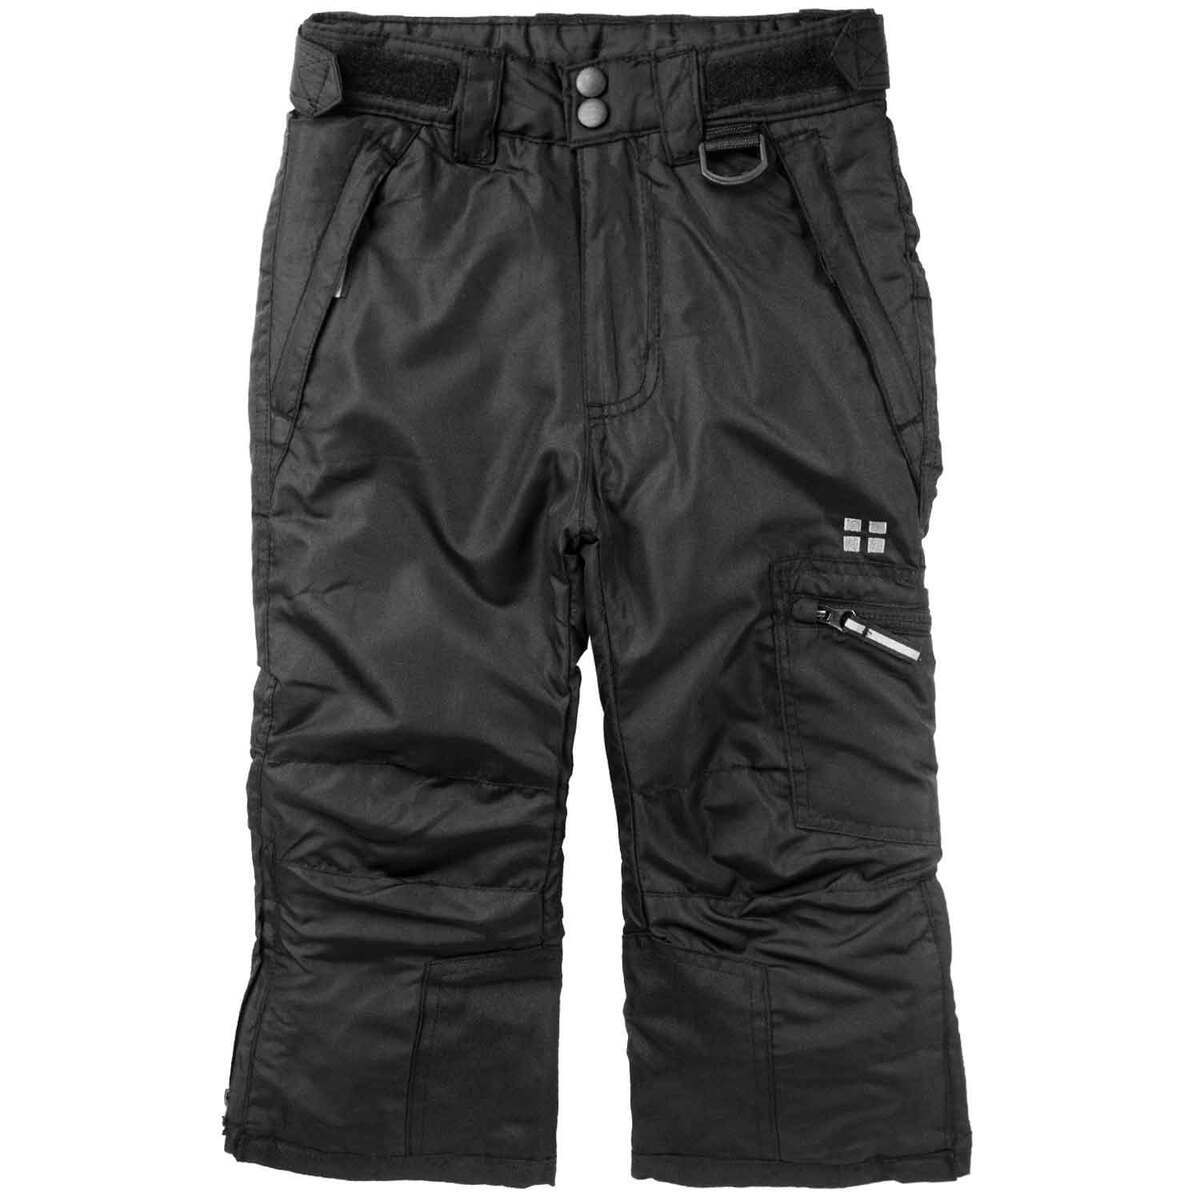 Swiss Alps Youth Taslon Ski Pants - Black 4 by Sportsman's Warehouse